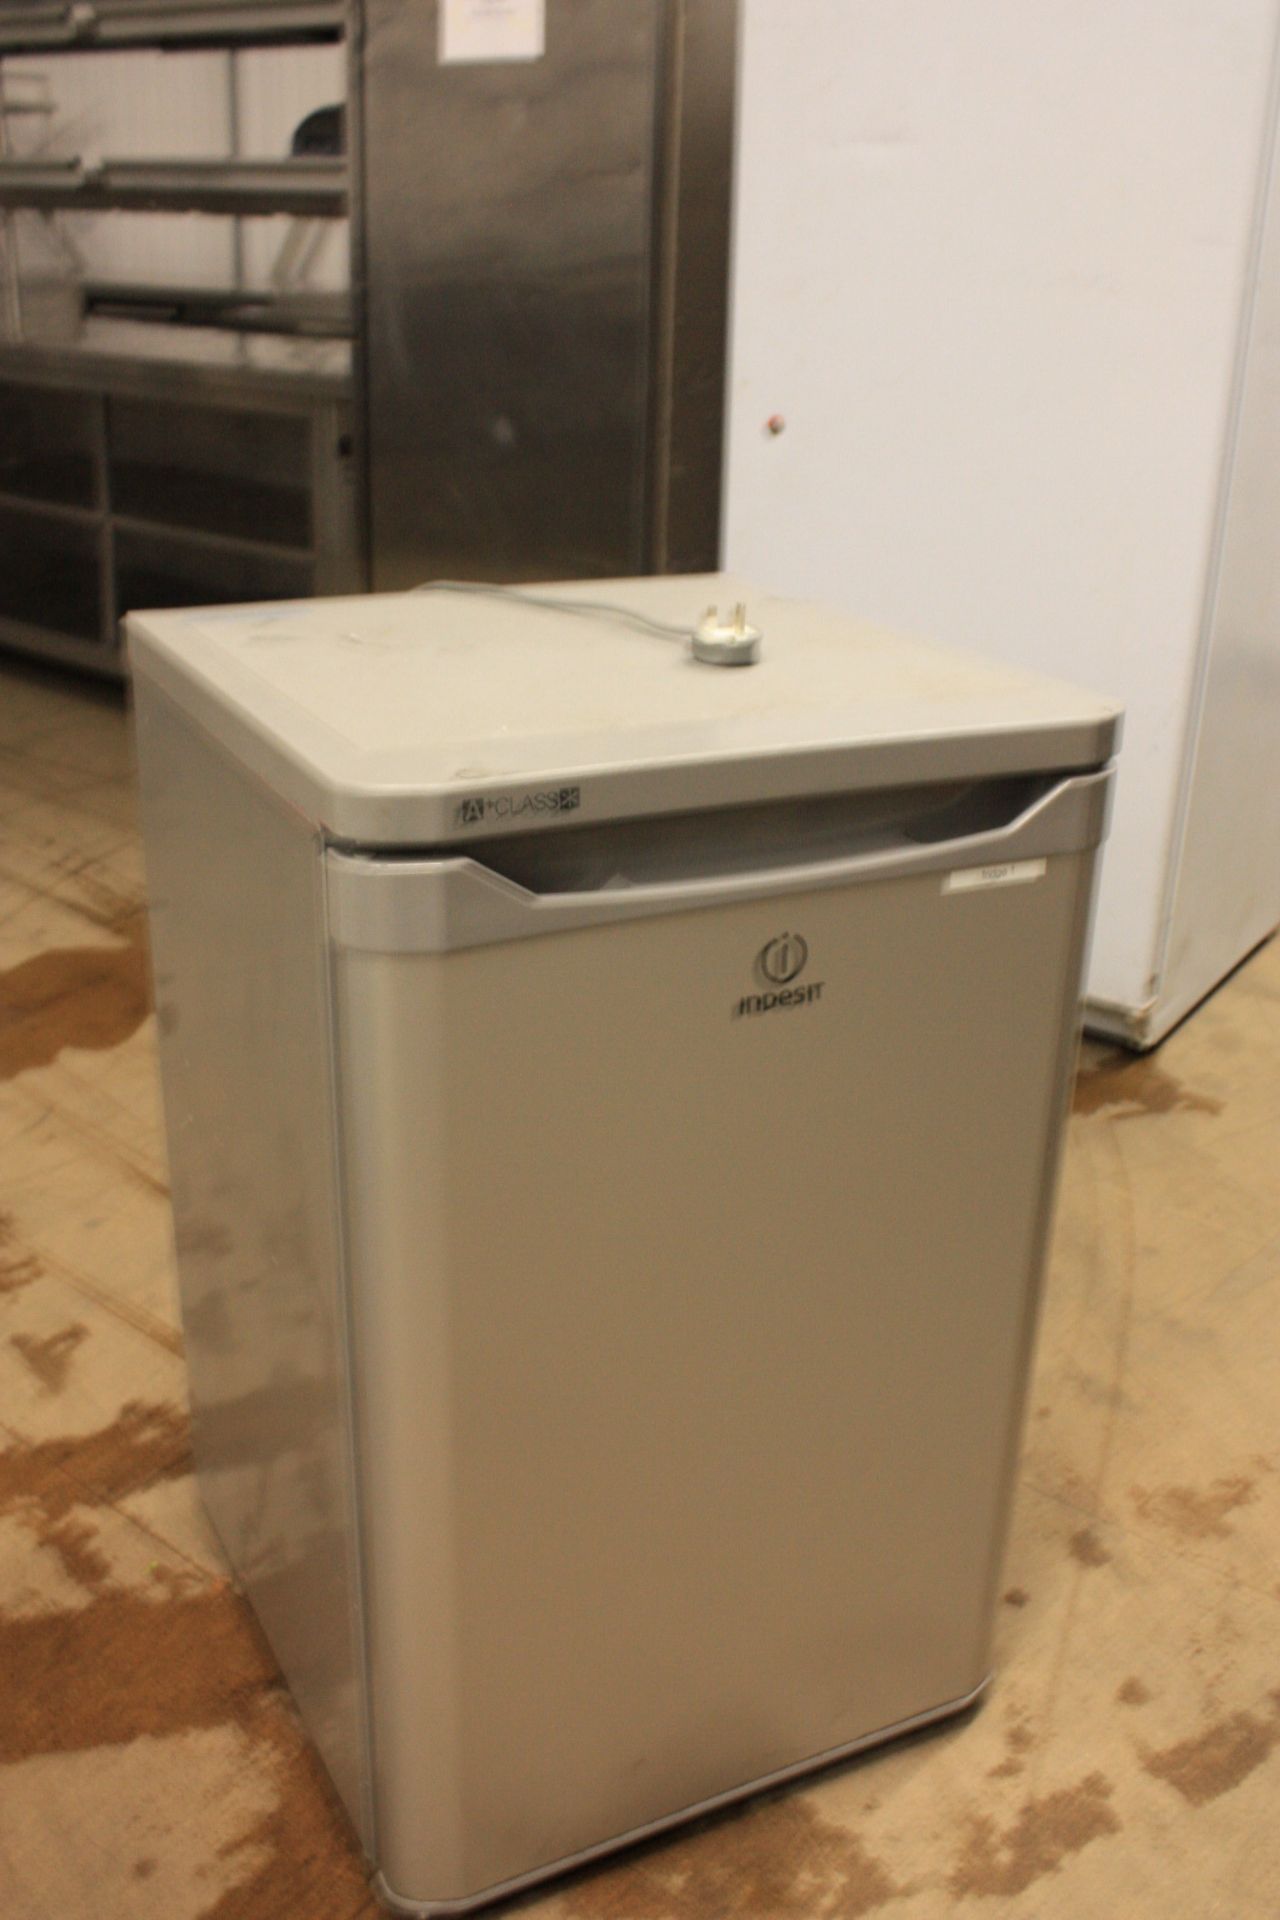 Inast silver undercounter refrigerator. Width 470mm x depth 500mm x height 840mm